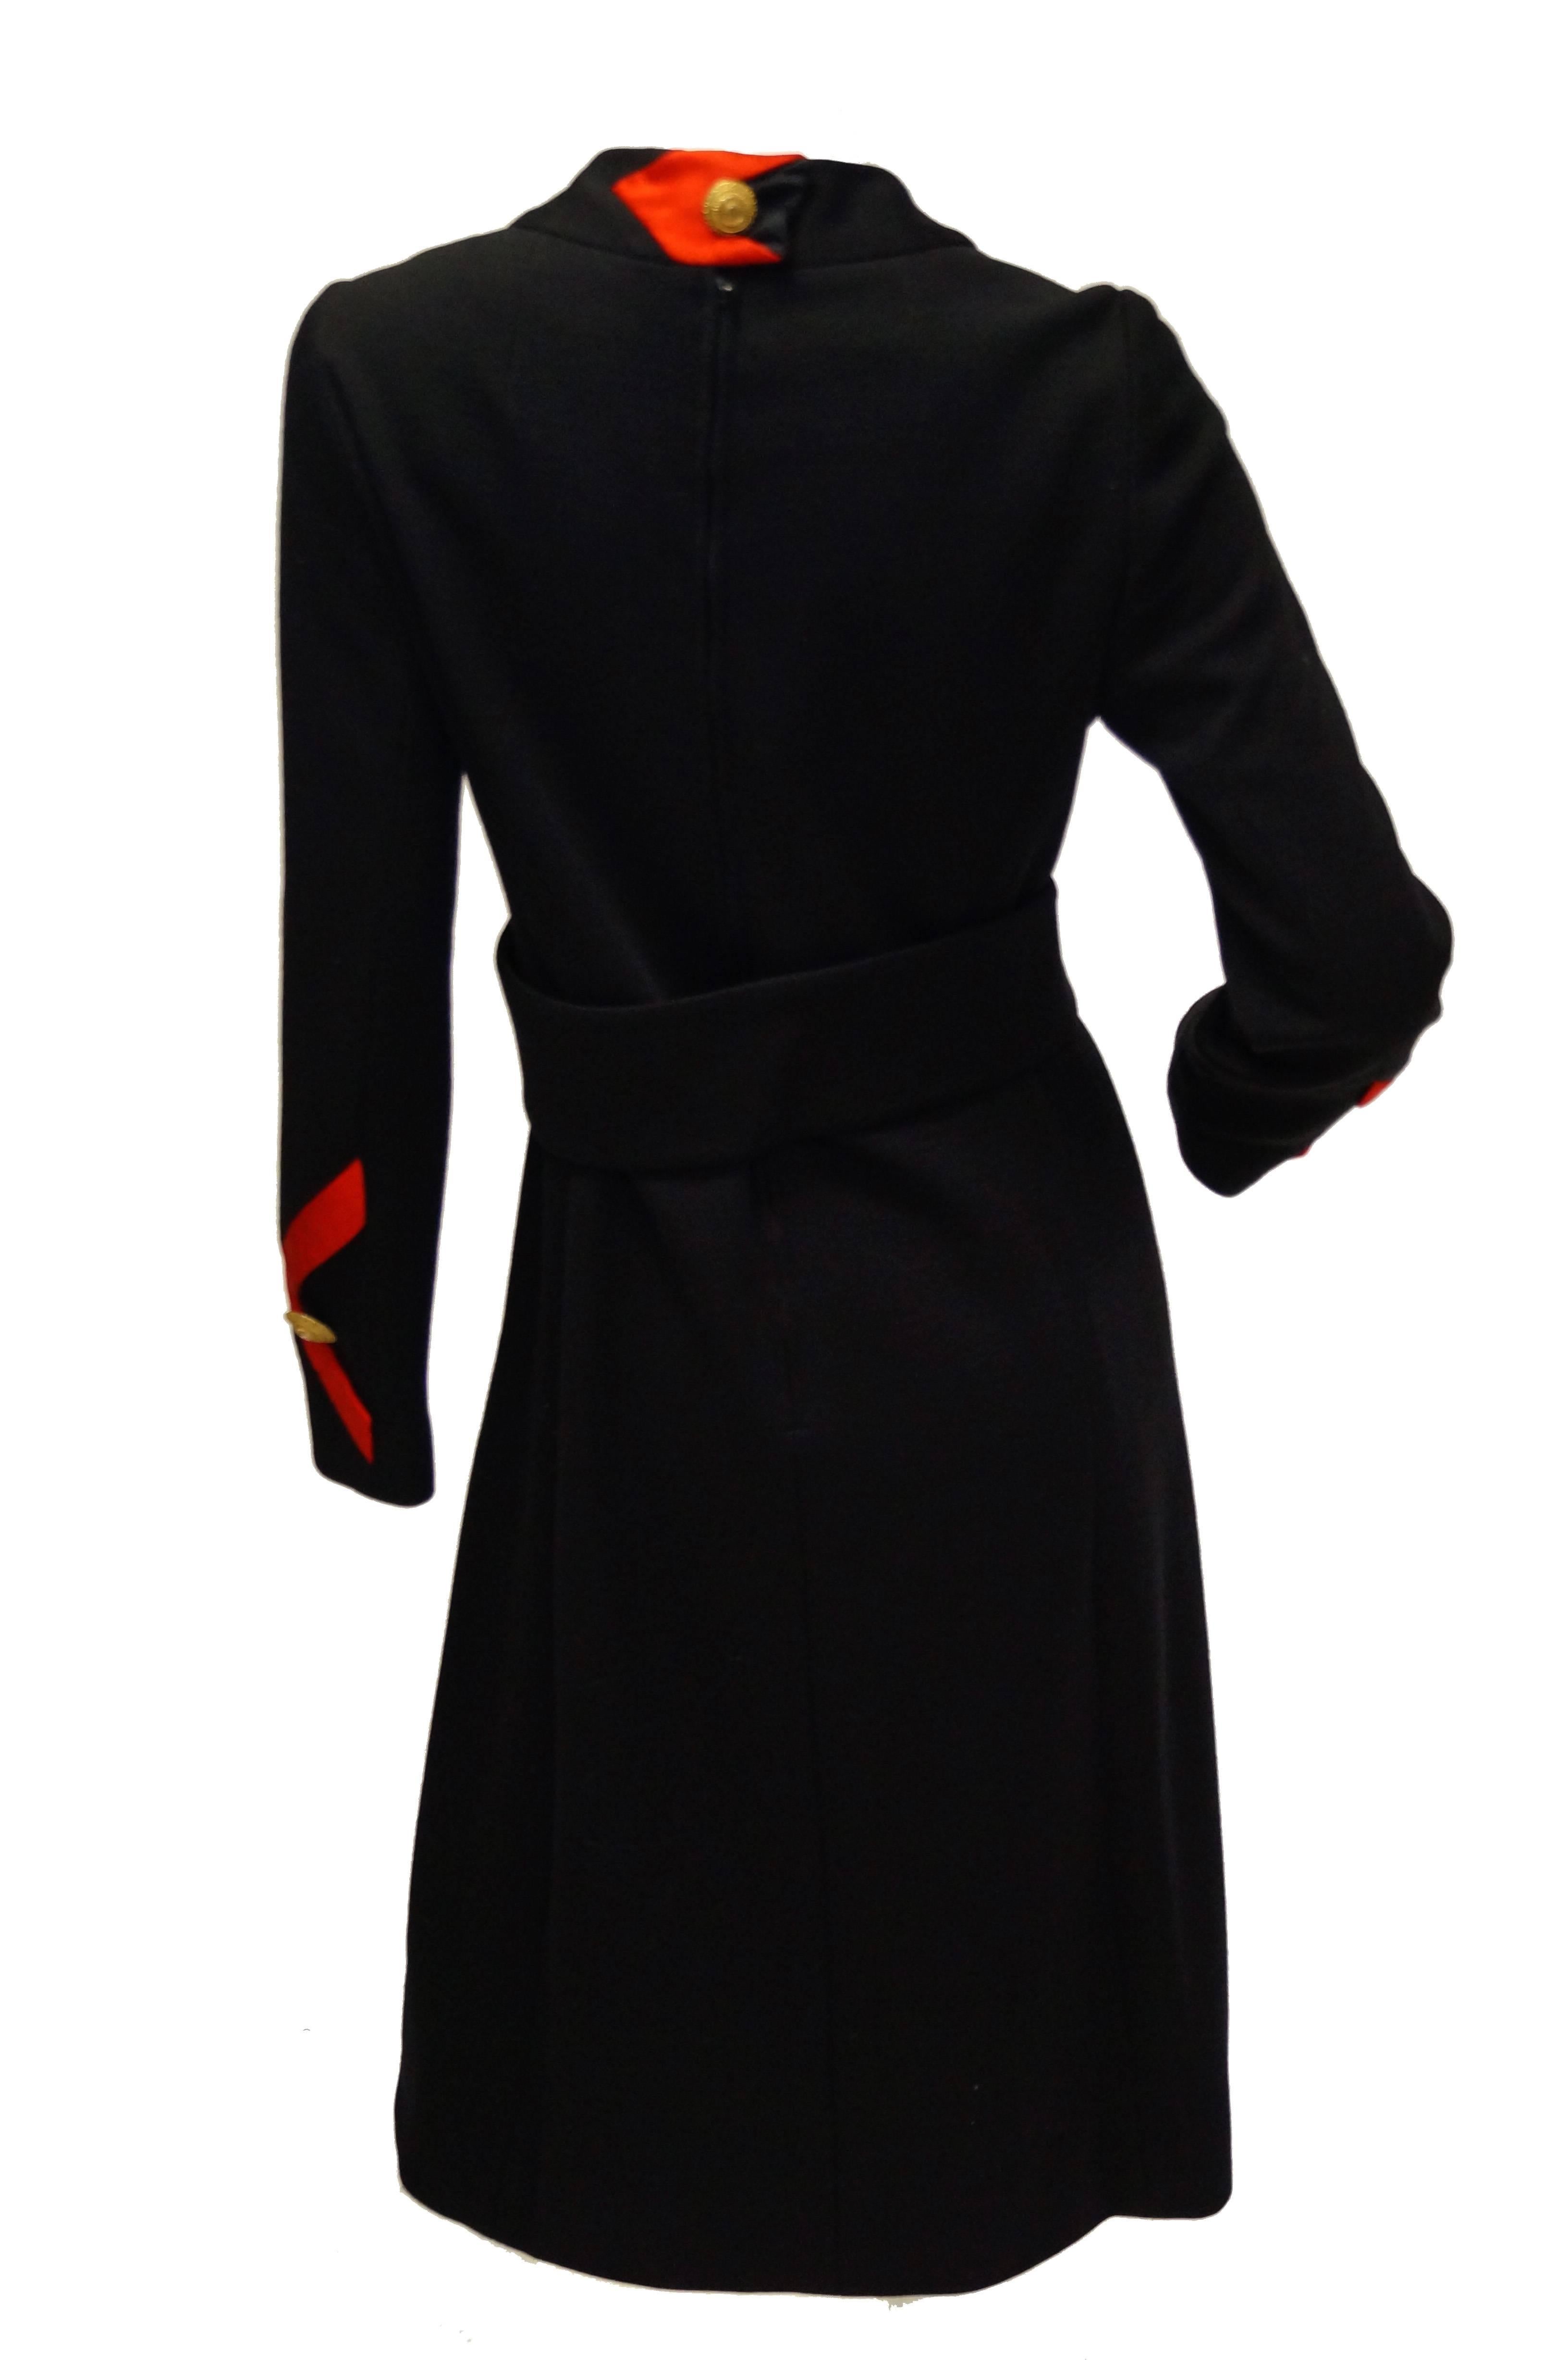 Women's 1960s Joseph Stein by Muriel Reade Wool Black and Red Arrow Accent Mod Dress